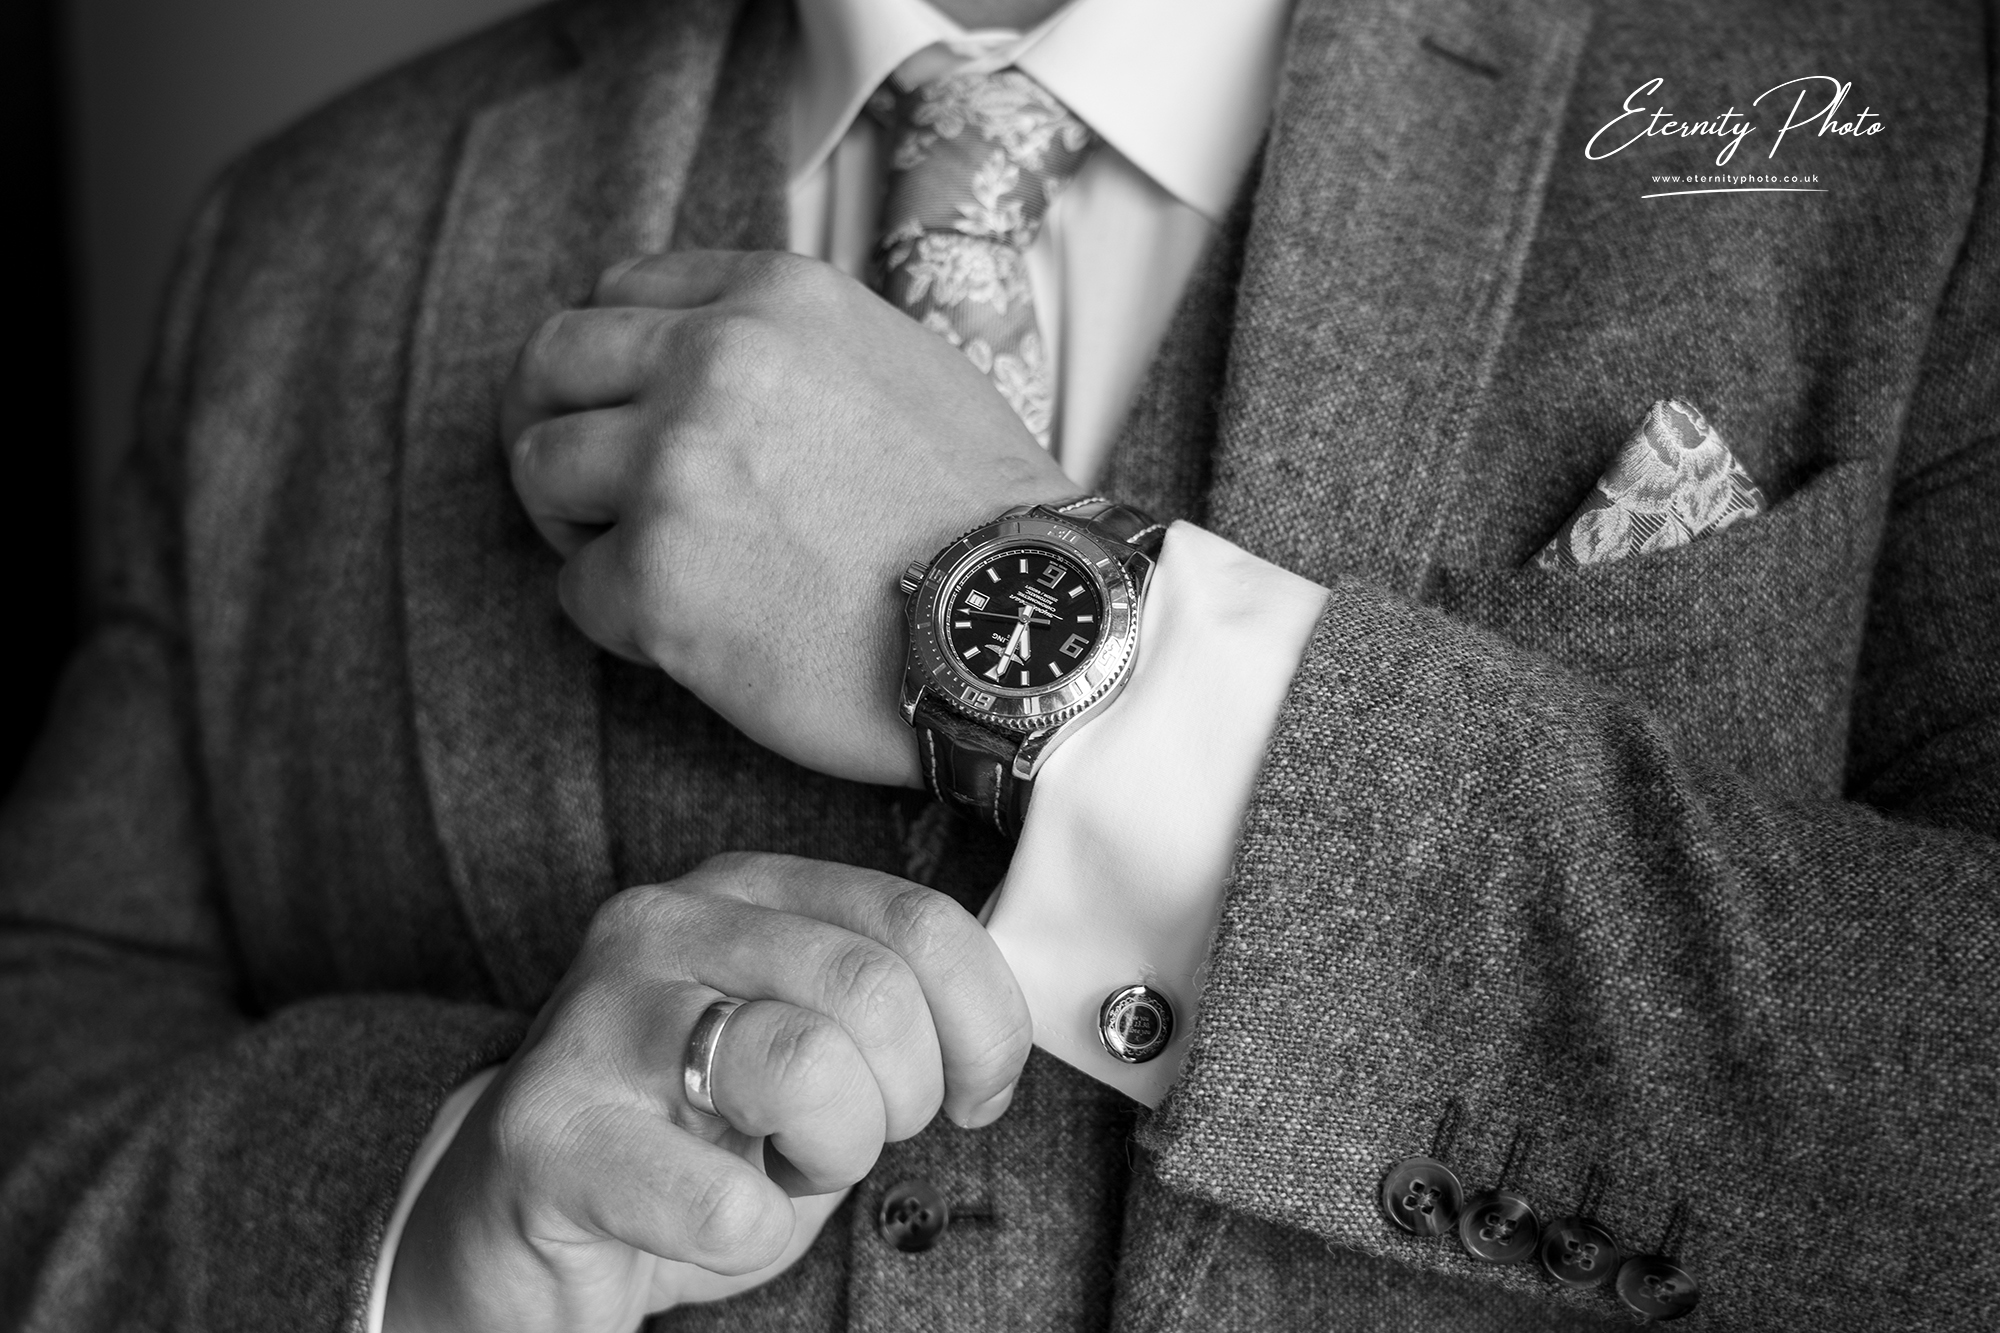 Man adjusting cufflink, wearing watch and suit.